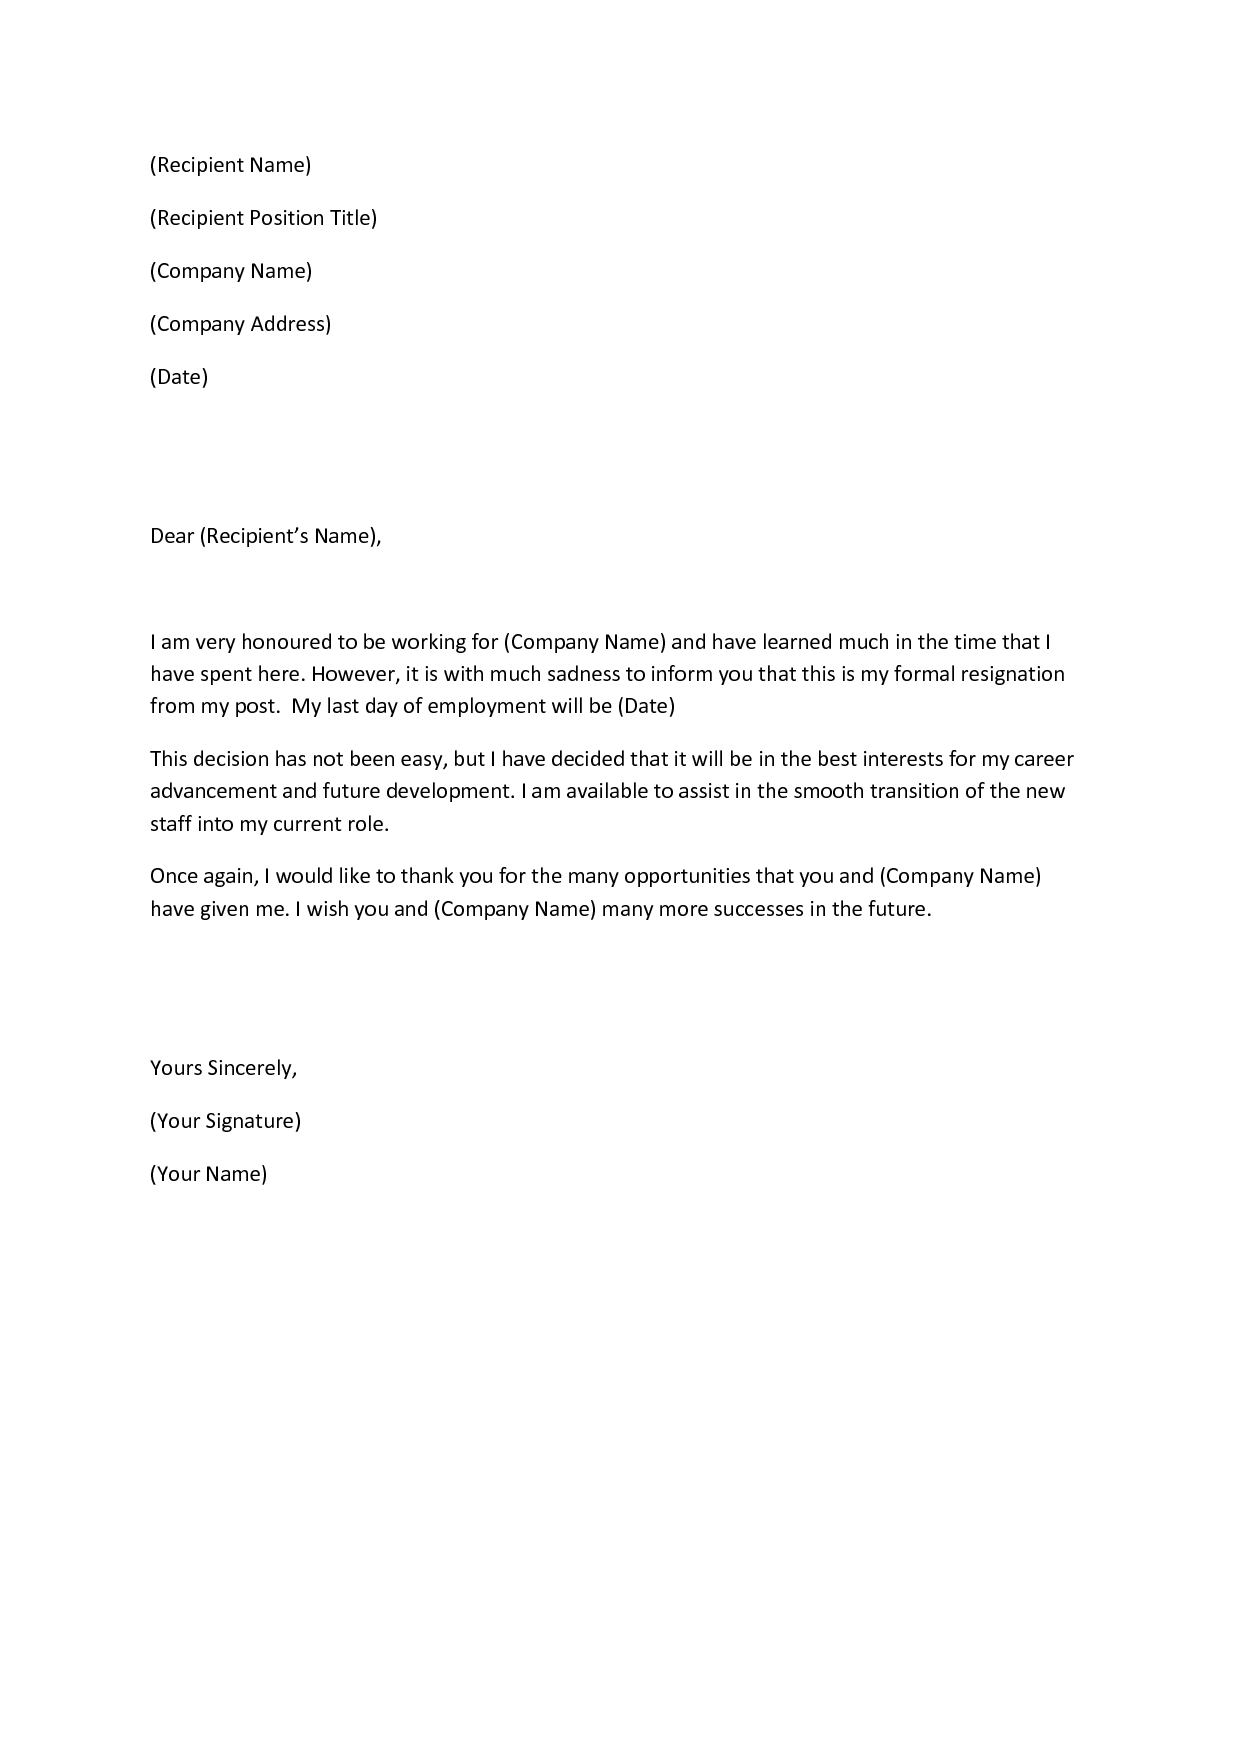 Formal Business Letter Format | Official Letter sample template